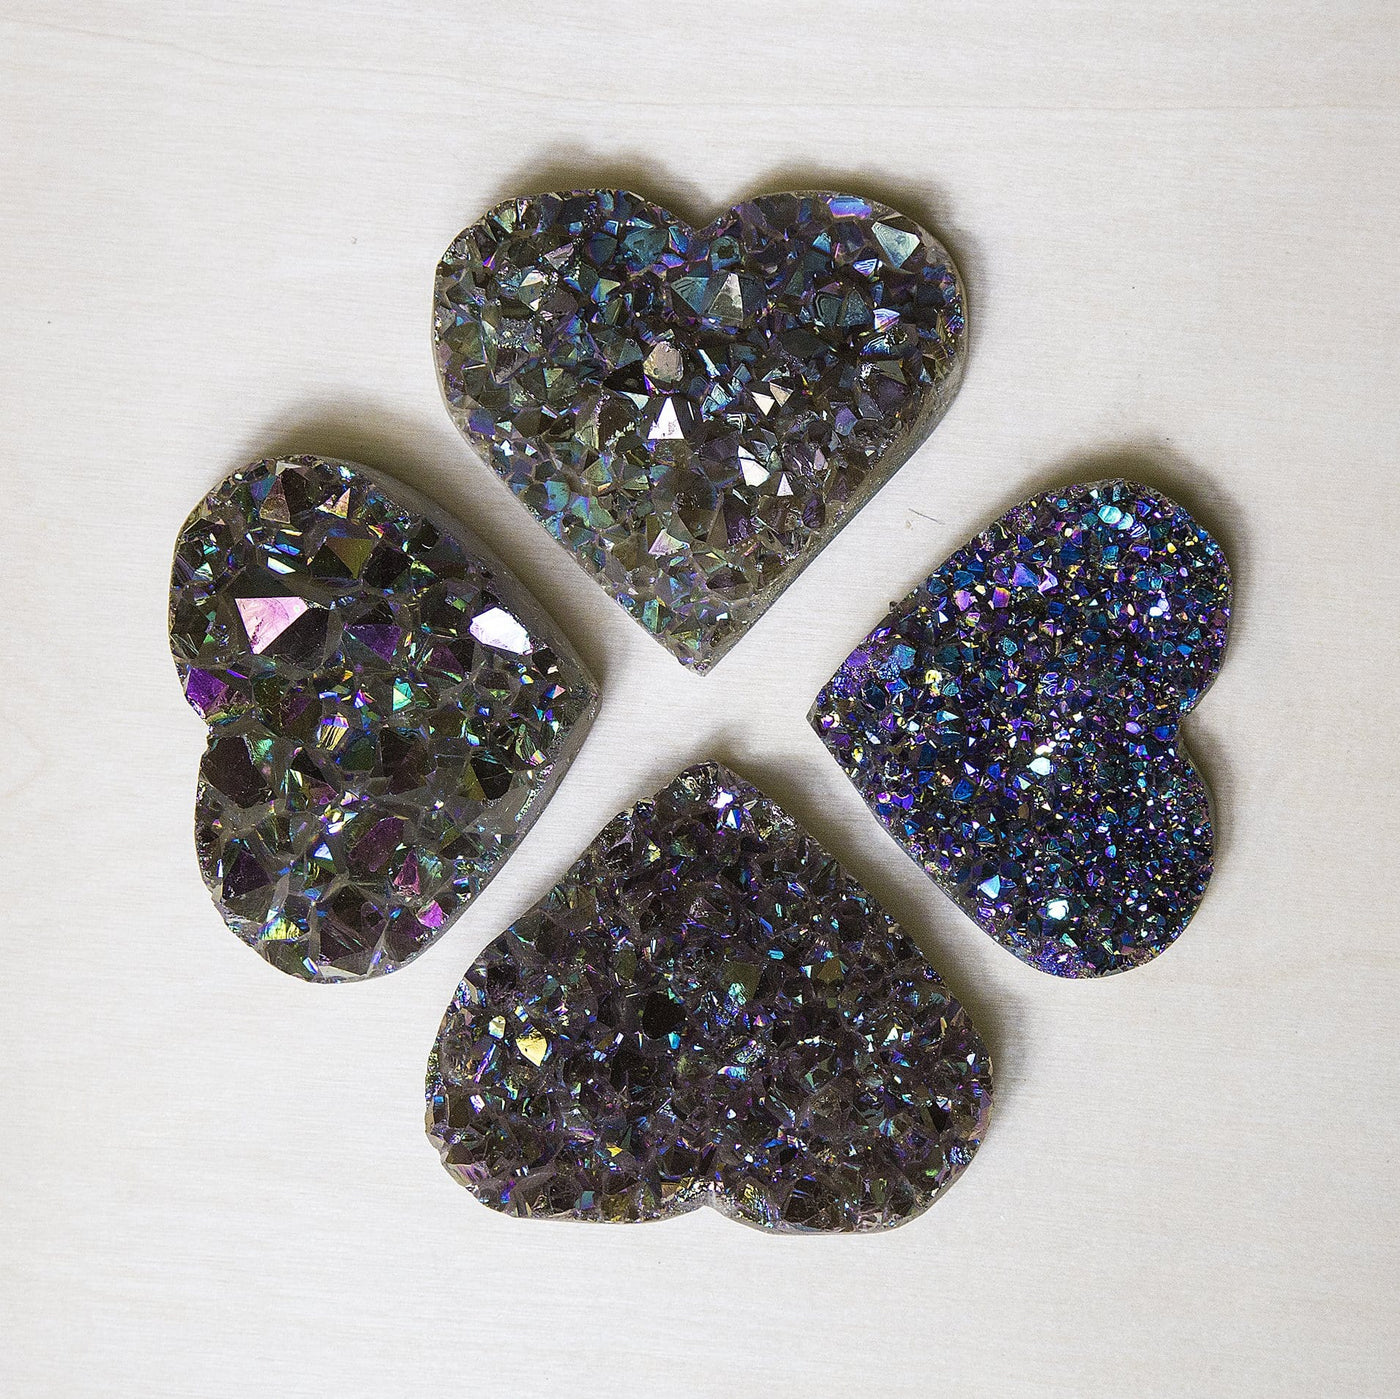 4 titanium hearts on a light background